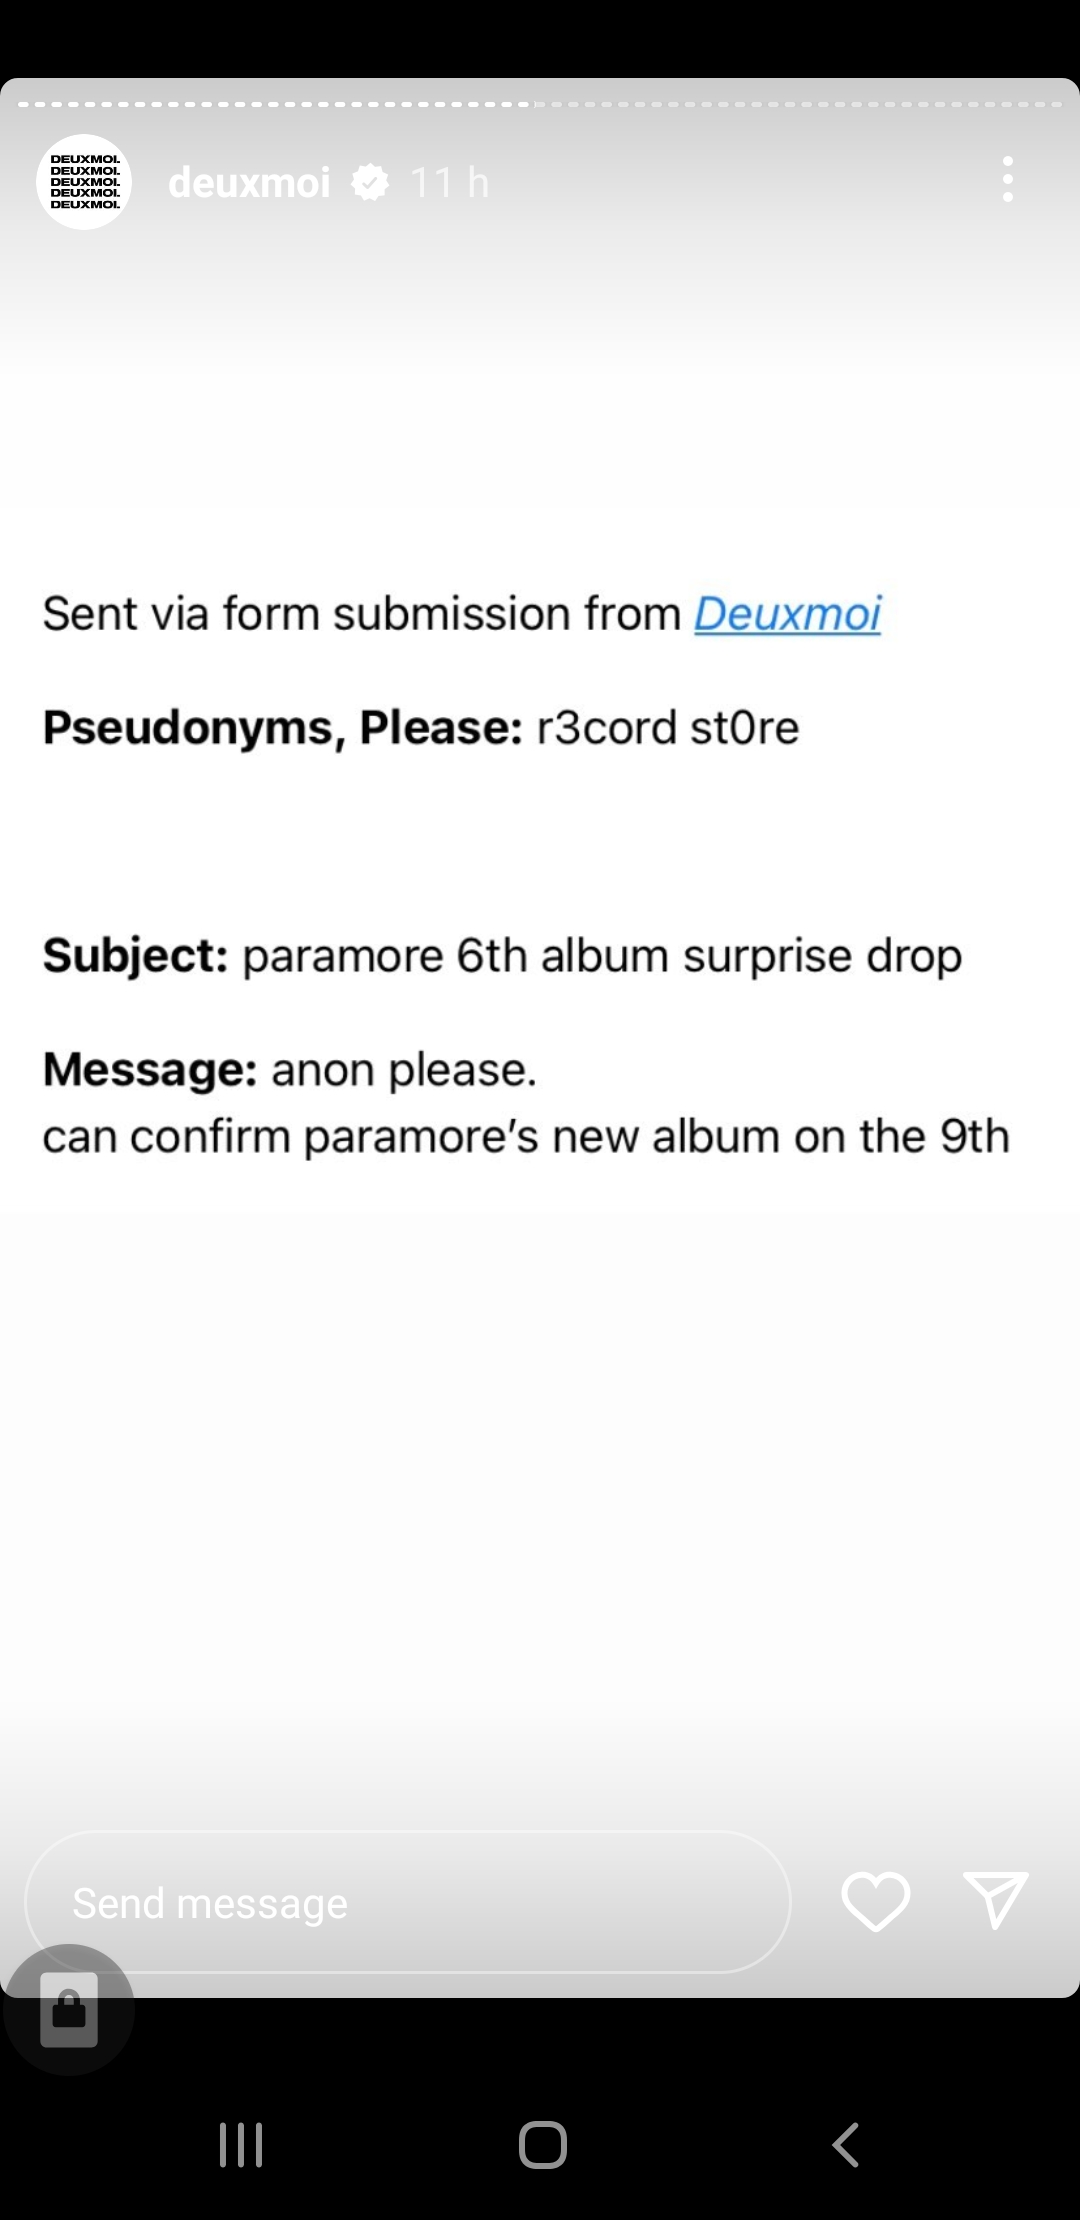 Deuxmoi sharing news regarding Paramore's new album. 